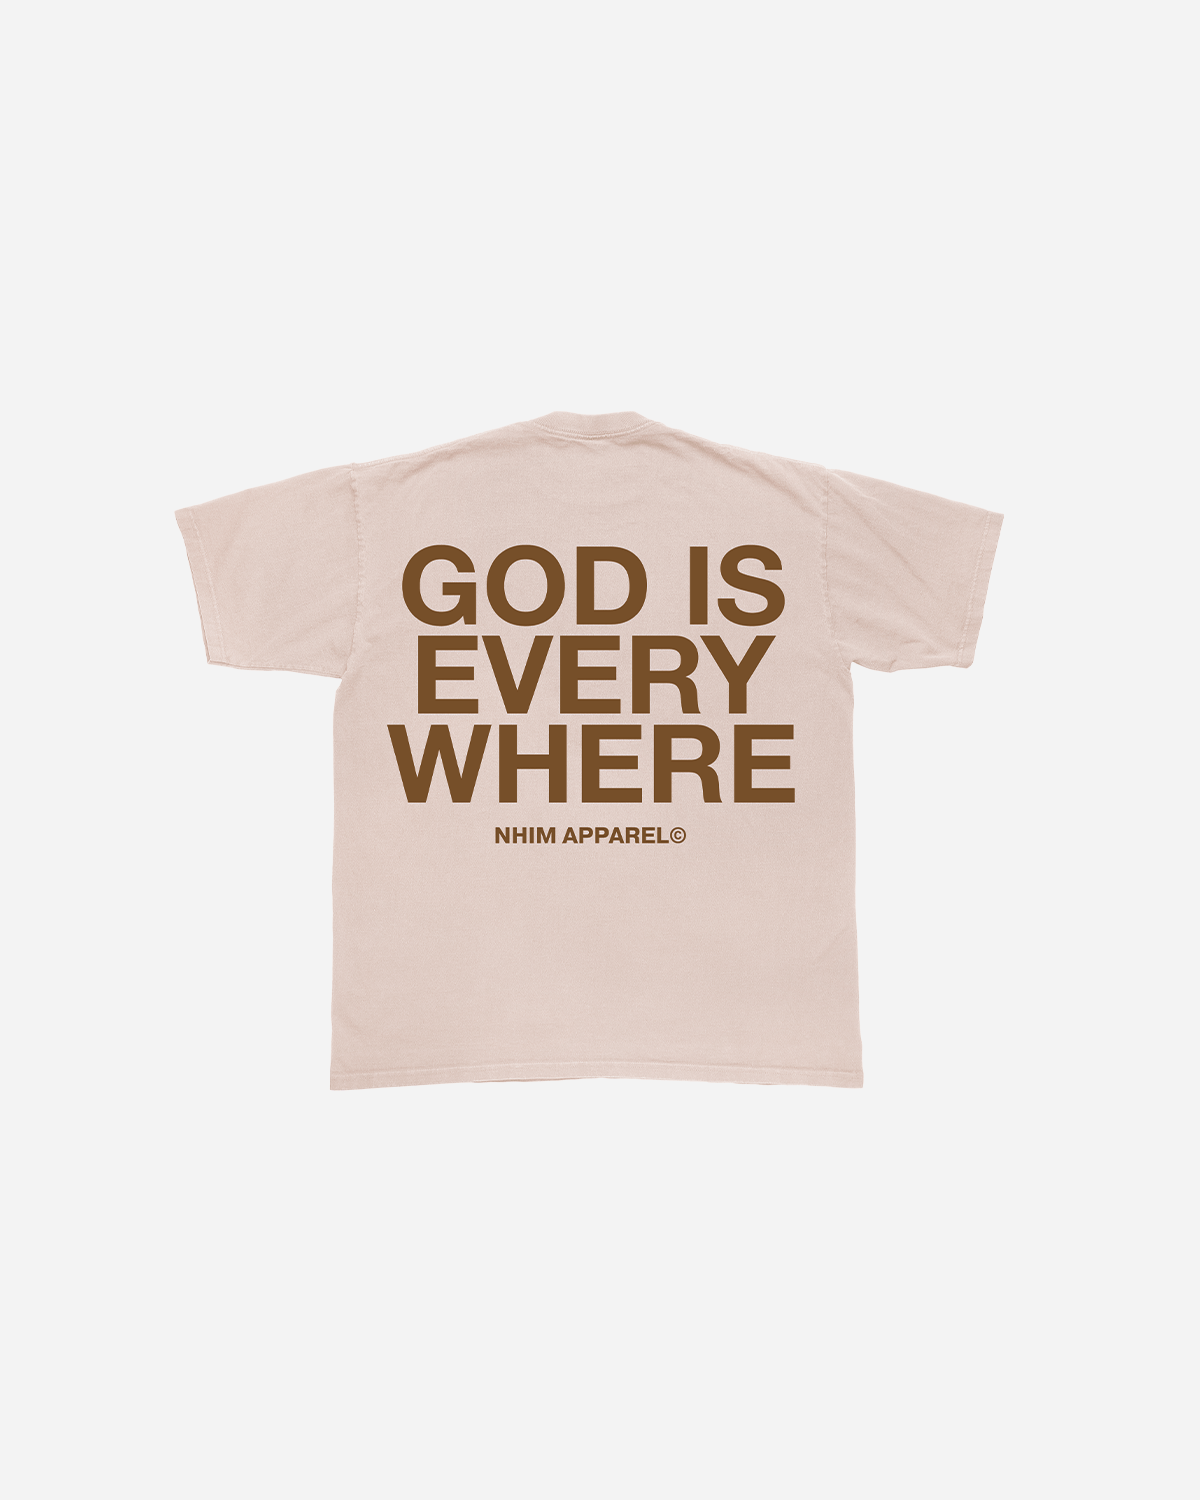 Christian t shirt. God is Everywhere. Made in USA. NHiM Apparel Christian Clothing Company. Rose Quartz